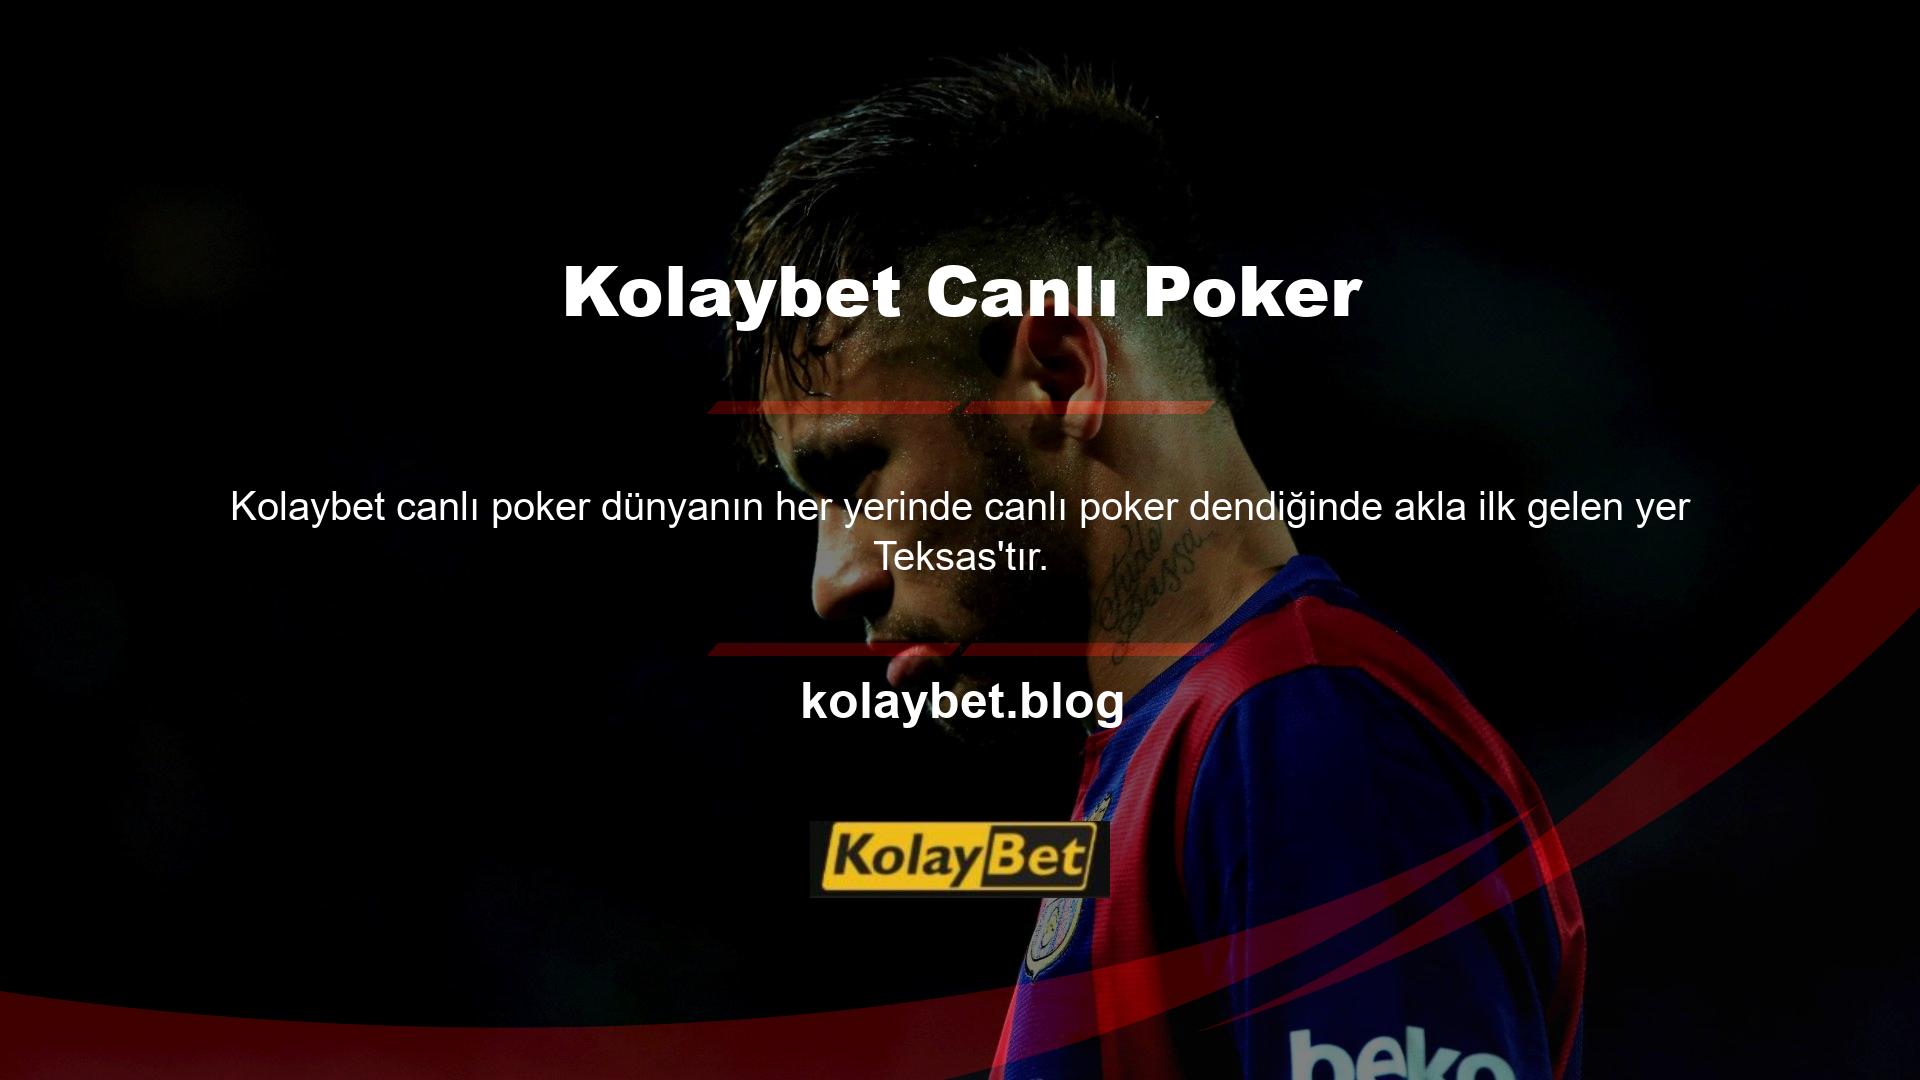 Ancak Poker alt kategorisinden Omaha Hold'em, Hi-Lo, Turkish Poker vb